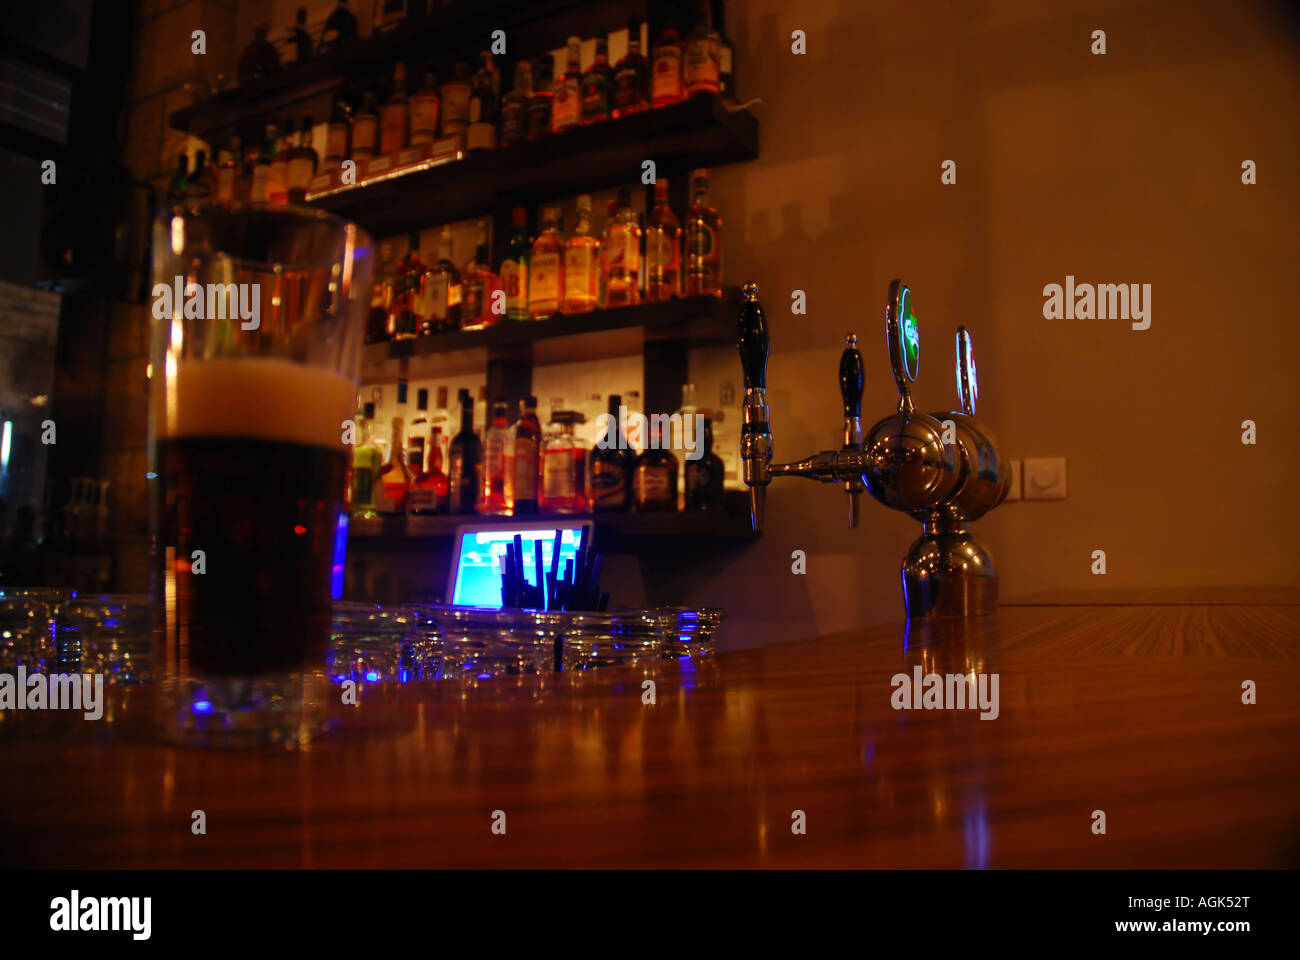 Dimly lit Interior of a bar Stock Photo